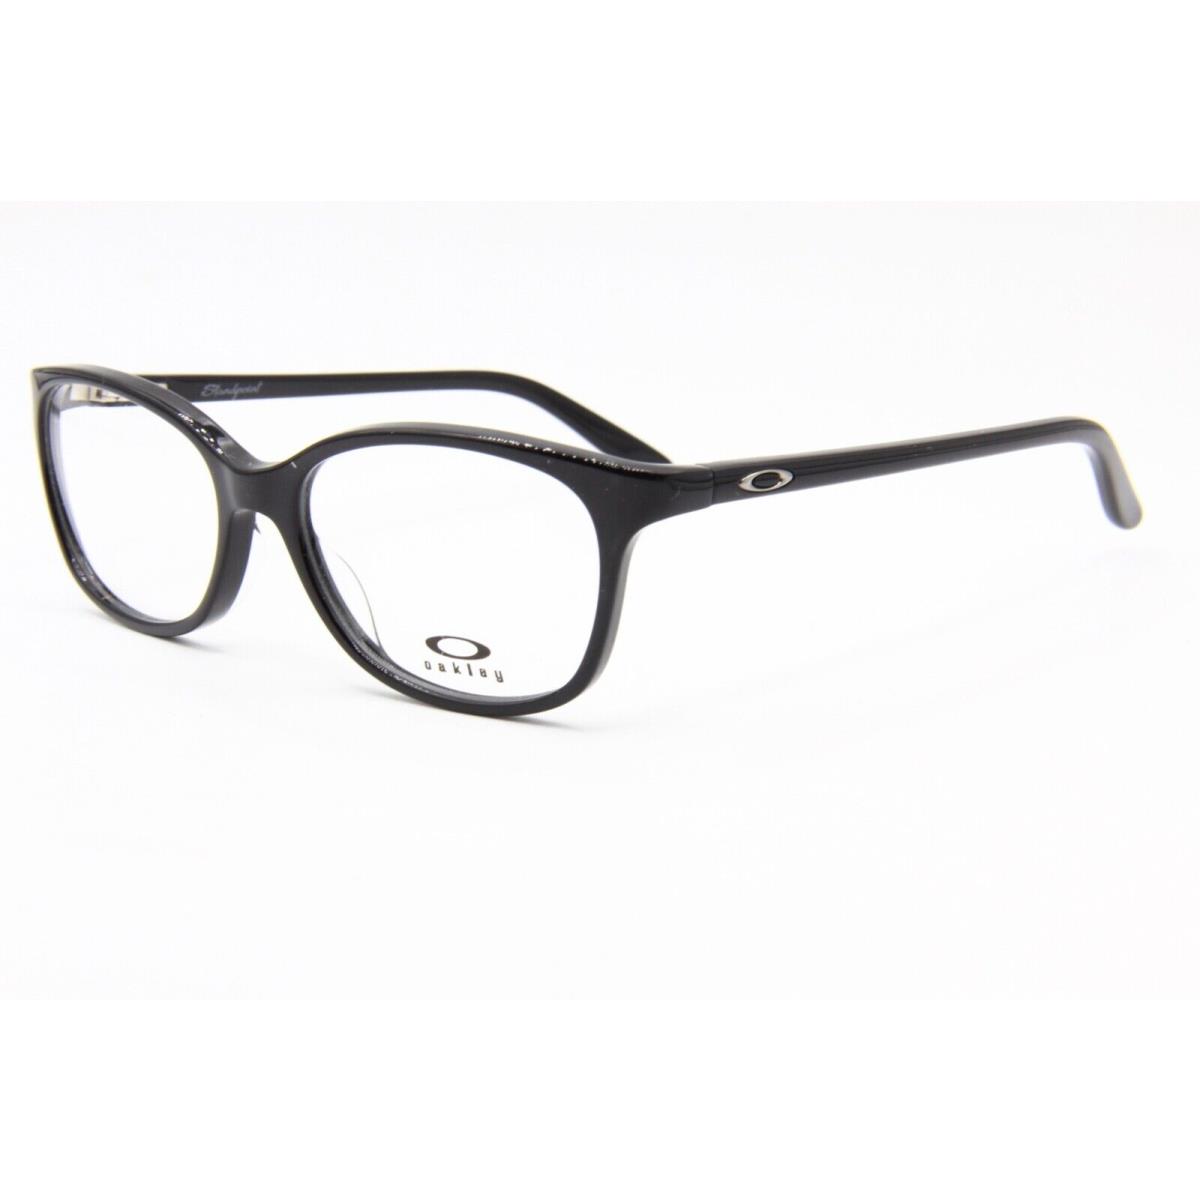 Oakley OX 1131-0152 Black Eyeglasses Frame OX1131 RX 52-16